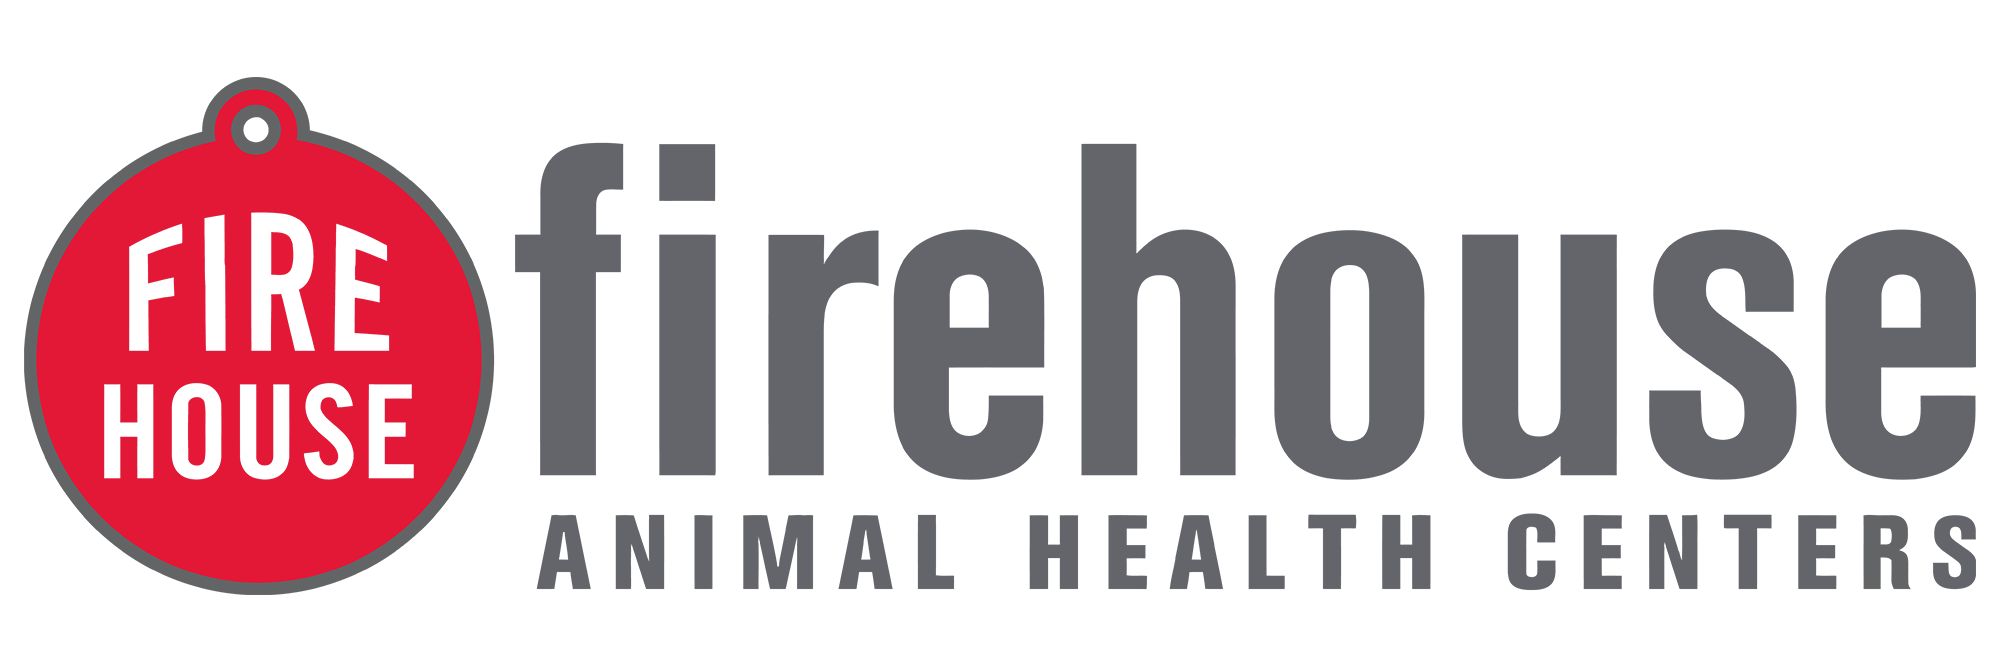 Firehouse Animal Health Center Logo